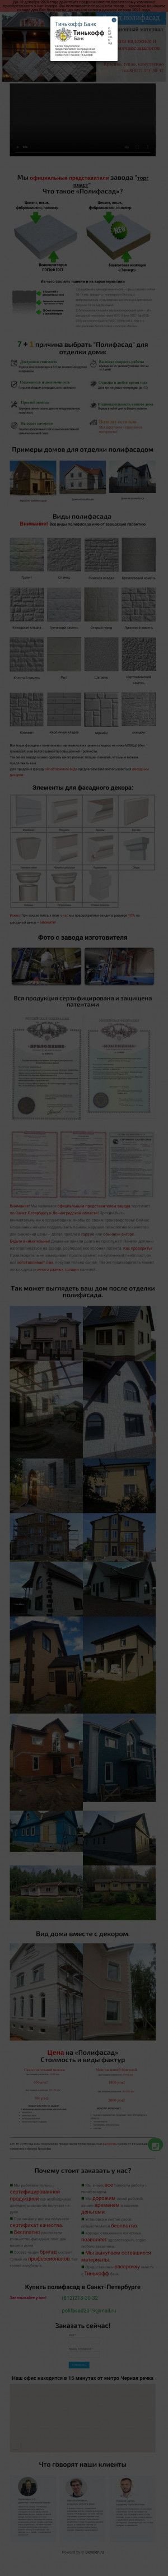 Предпросмотр для www.polifasad47.ru — Отделка фасадов